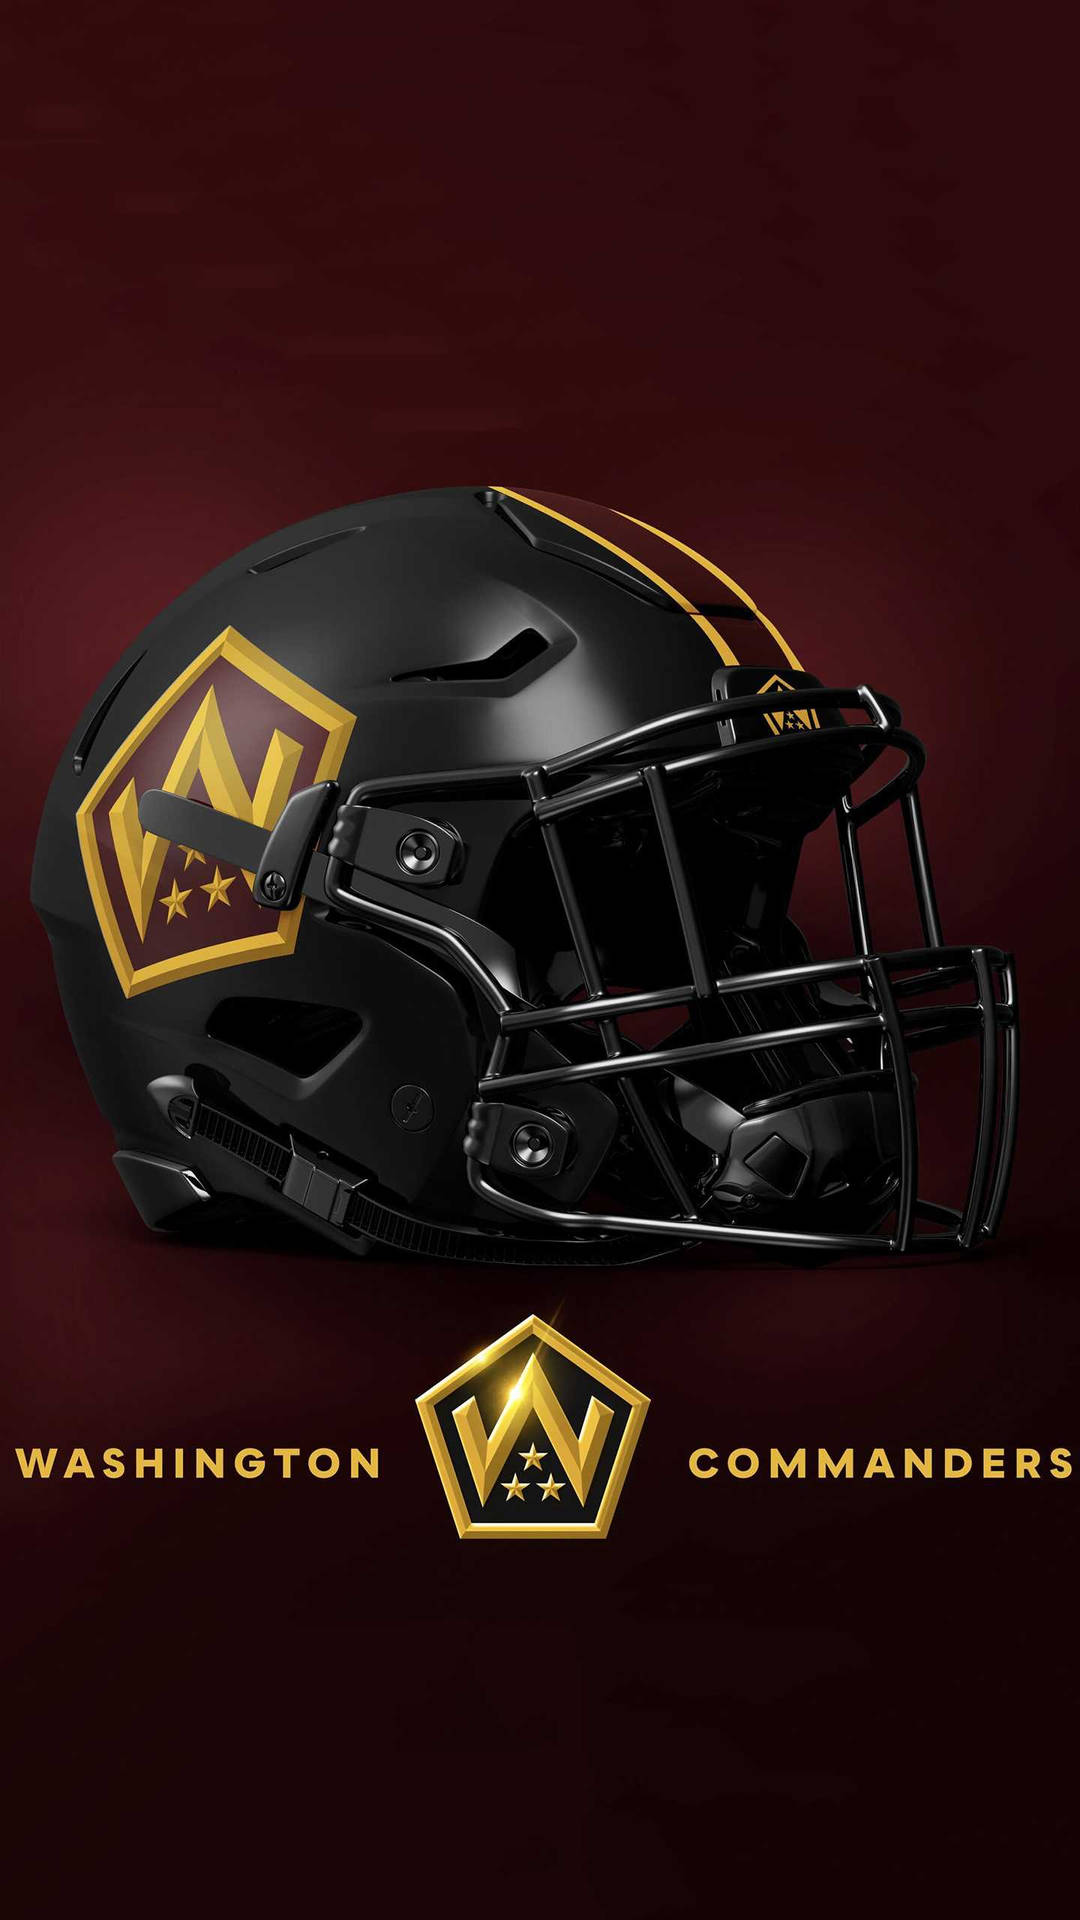 Washington Commanders Football Helmet Background